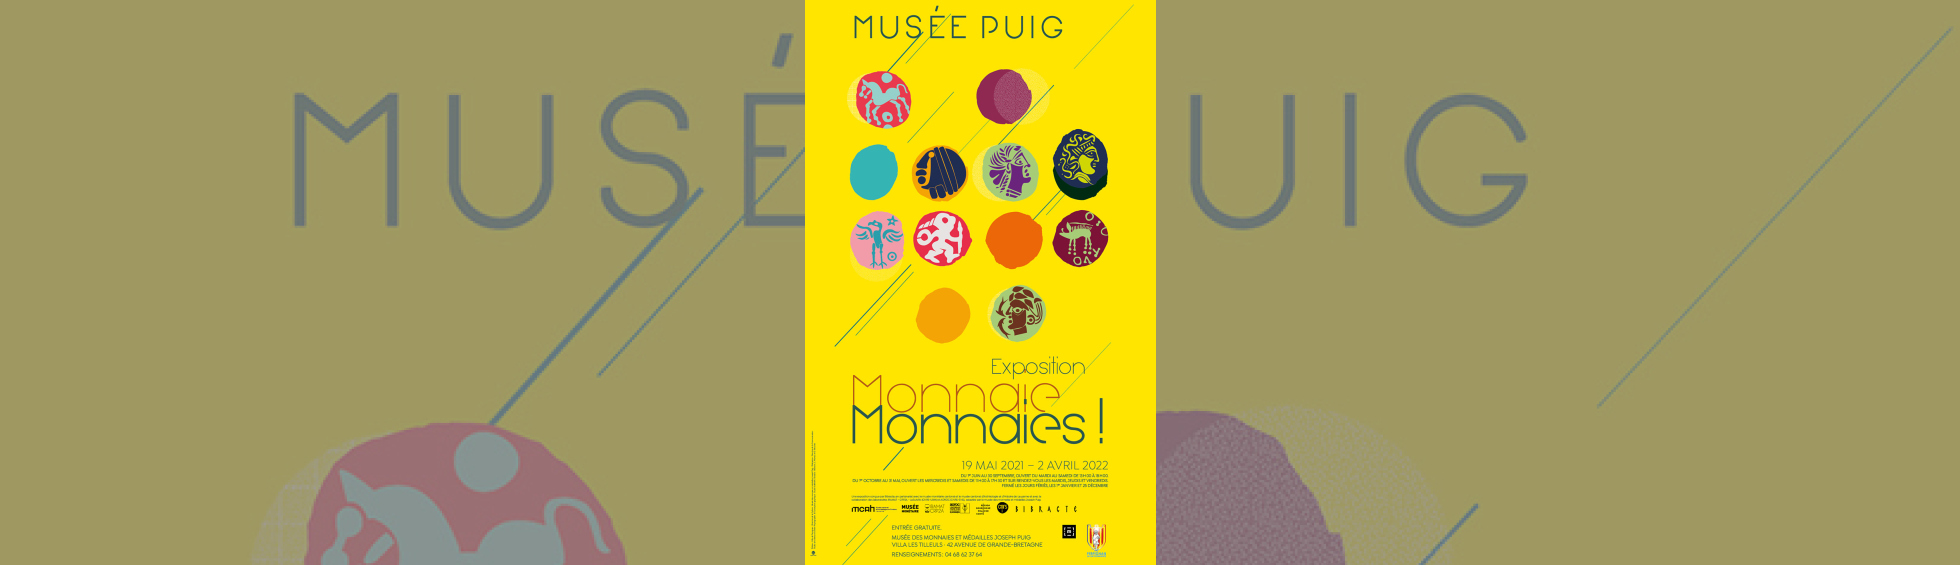 Musée Puig -exposition "Monnaie, Monnaies !"